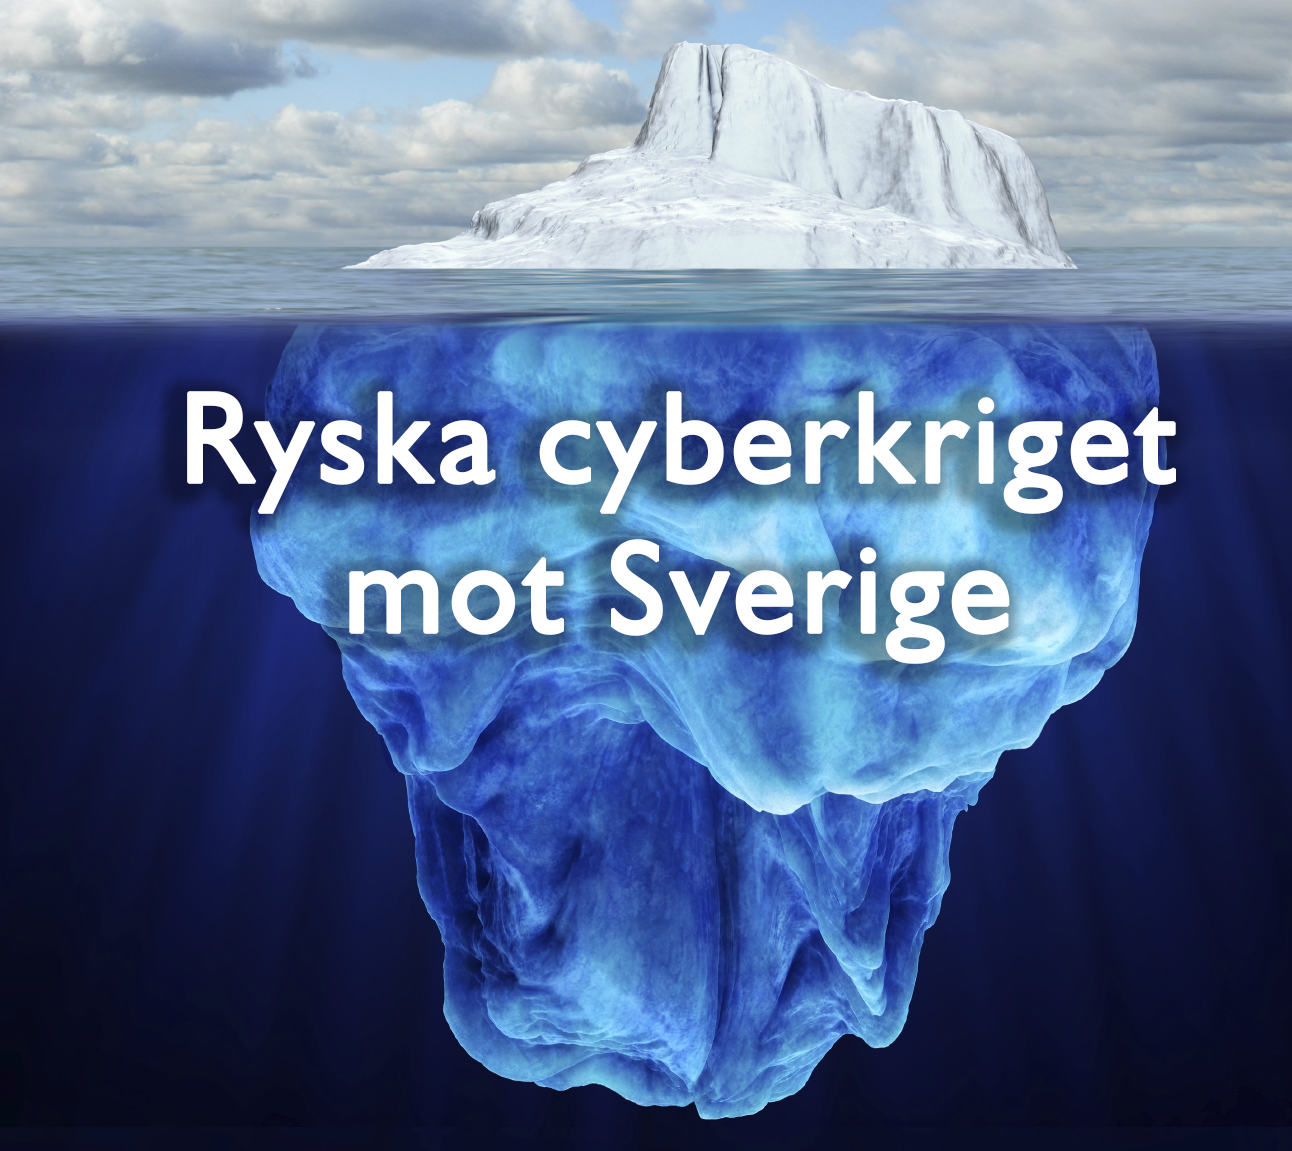 Ryska cyberkriget mot Sverige